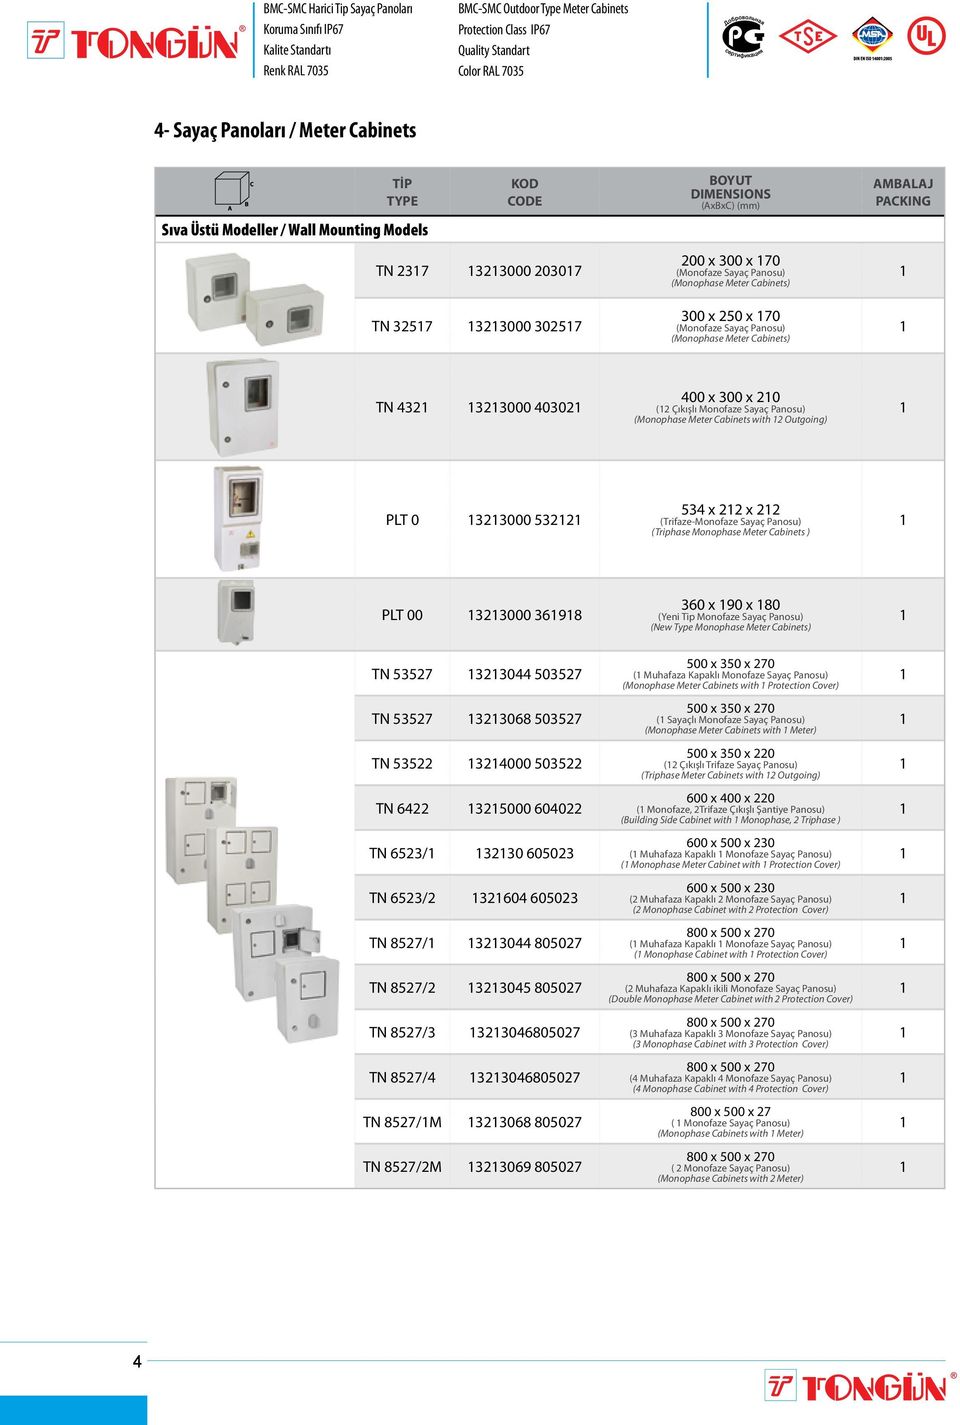 (Monophase Meter Cabinets) TN 432 323000 40302 400 x 300 x 20 (2 Çıkışlı Monofaze Sayaç Panosu) (Monophase Meter Cabinets with 2 Outgoing) PLT 0 323000 5322 534 x 22 x 22 (Trifaze-Monofaze Sayaç